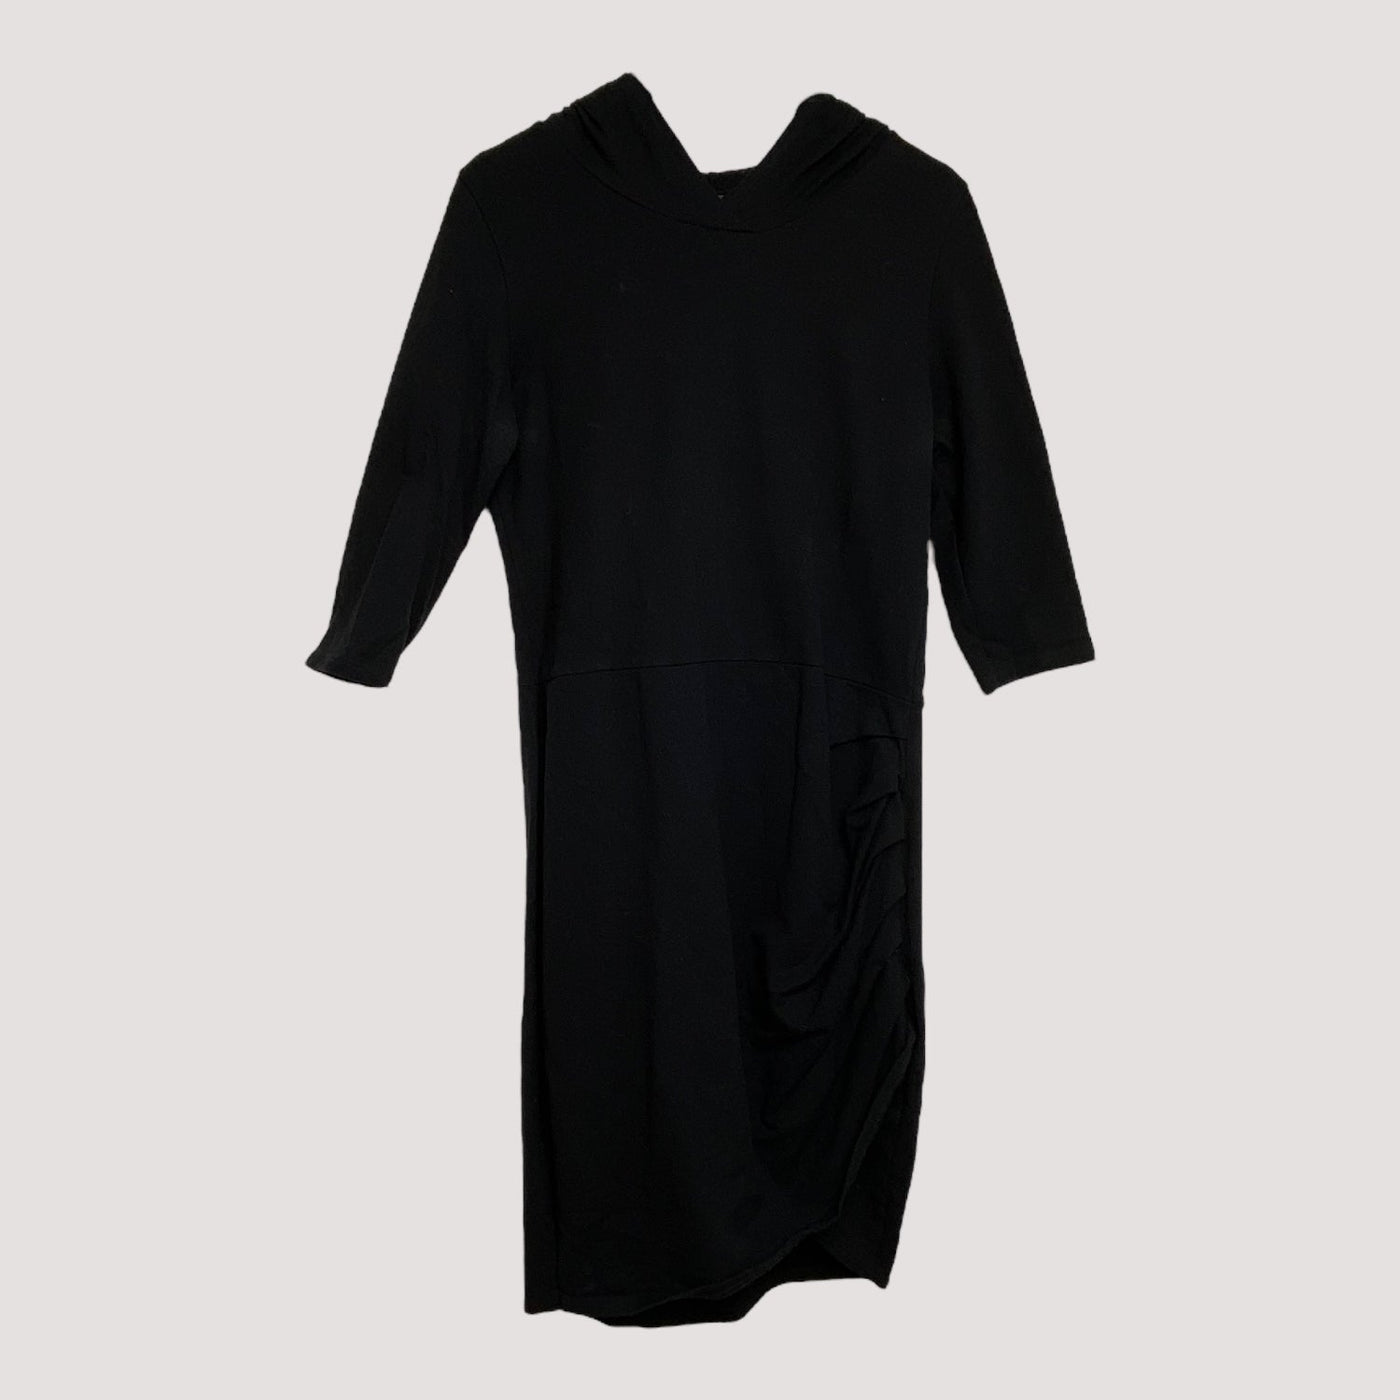 Uhana sweat dress, black | woman M